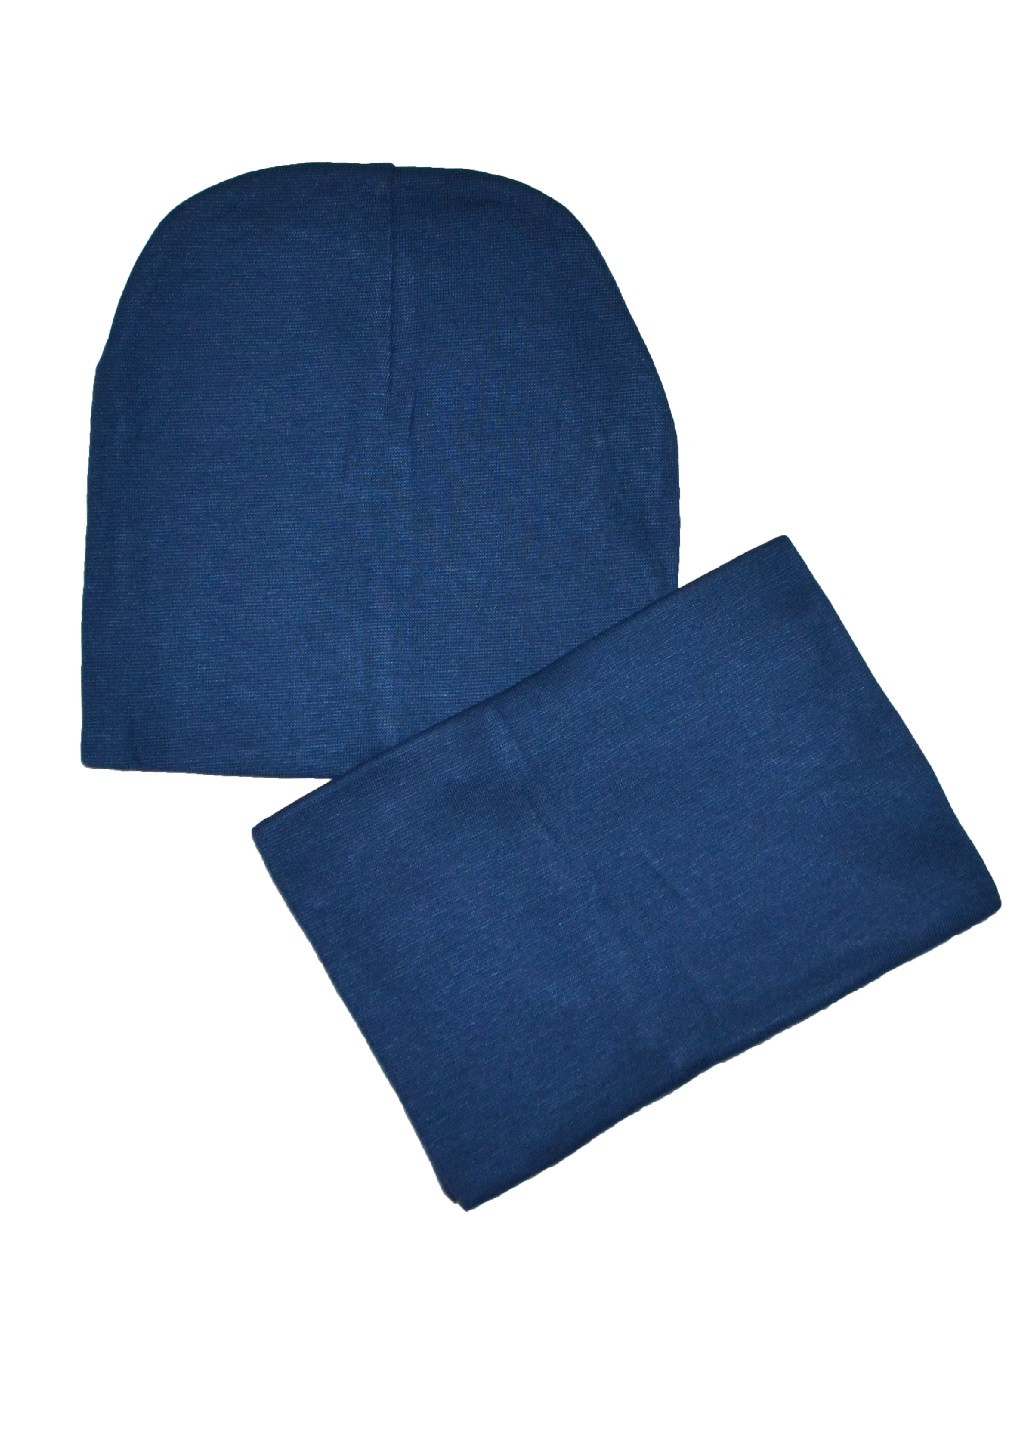 Шапка и шарф-снуд No Brand шапка + шарф-снуд однотонные синие кэжуалы хлопок